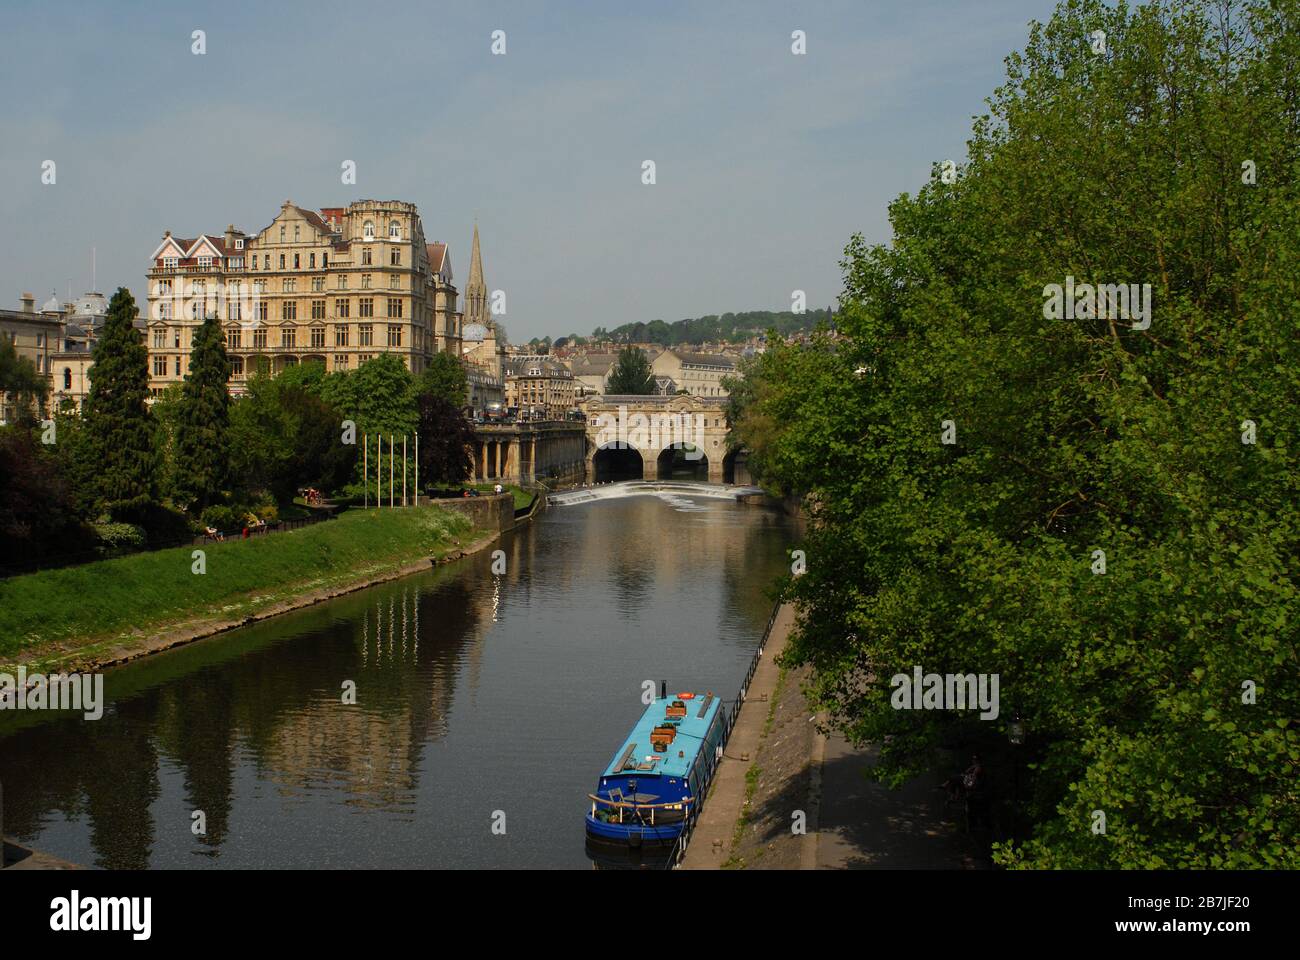 Avon River, Bath, Somerset, UK.Foto: © Rosmi Duaso/fototextbcn. Stockfoto